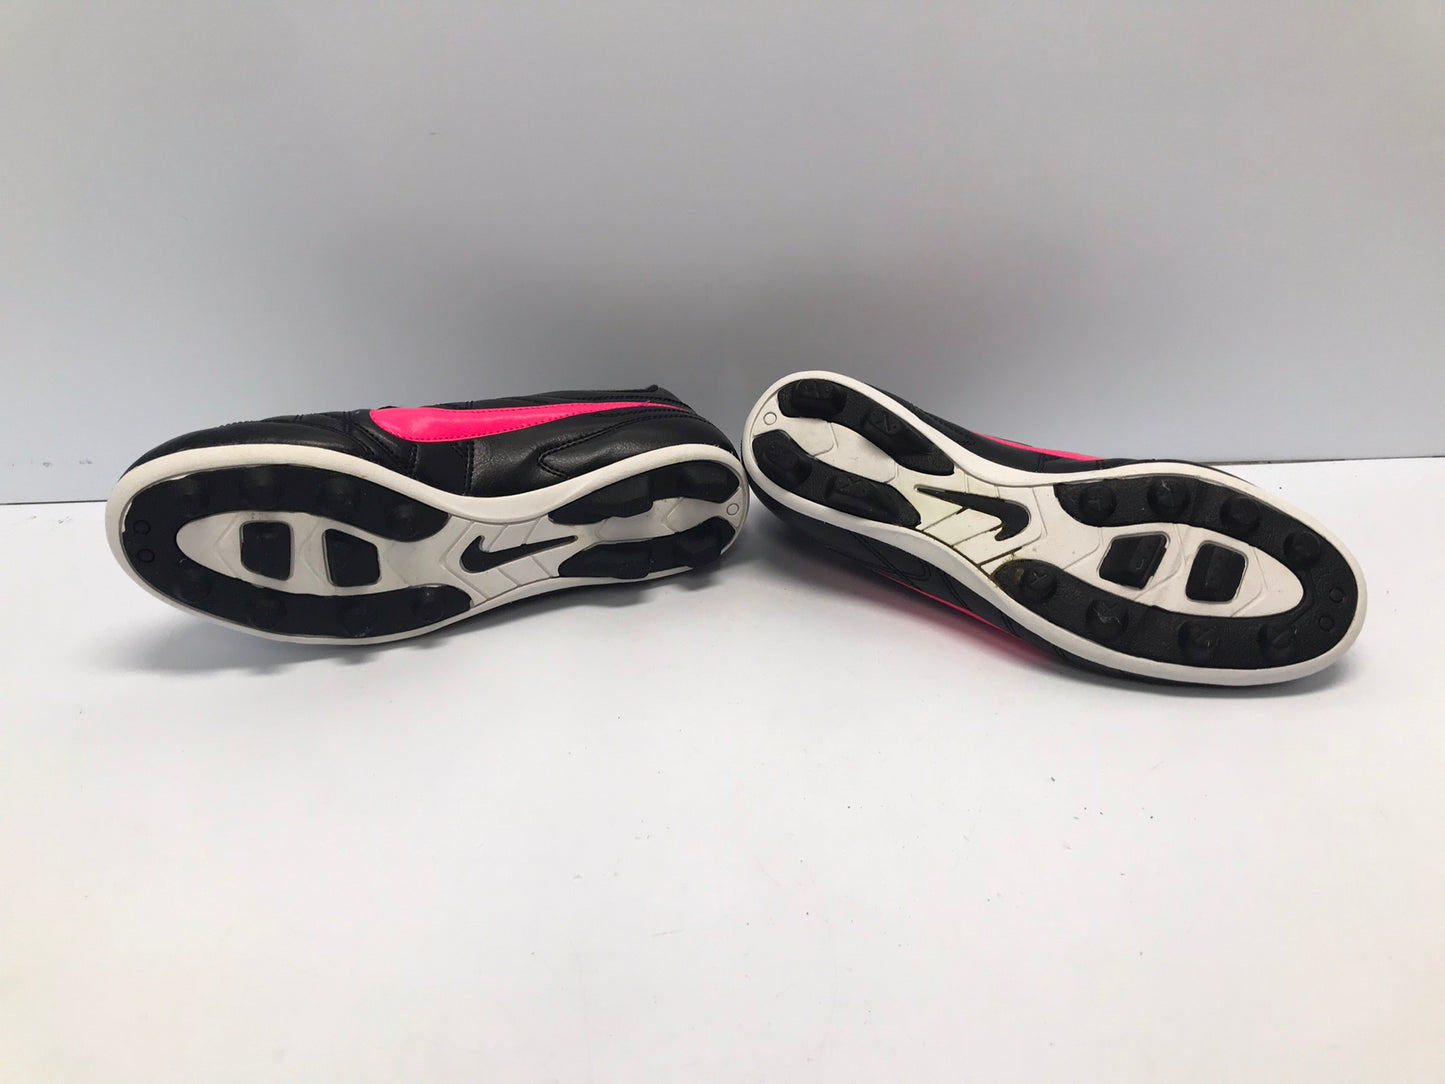 Soccer Shoes Cleats Men's Size 6 Adidas Black Fushia Pink Excellent